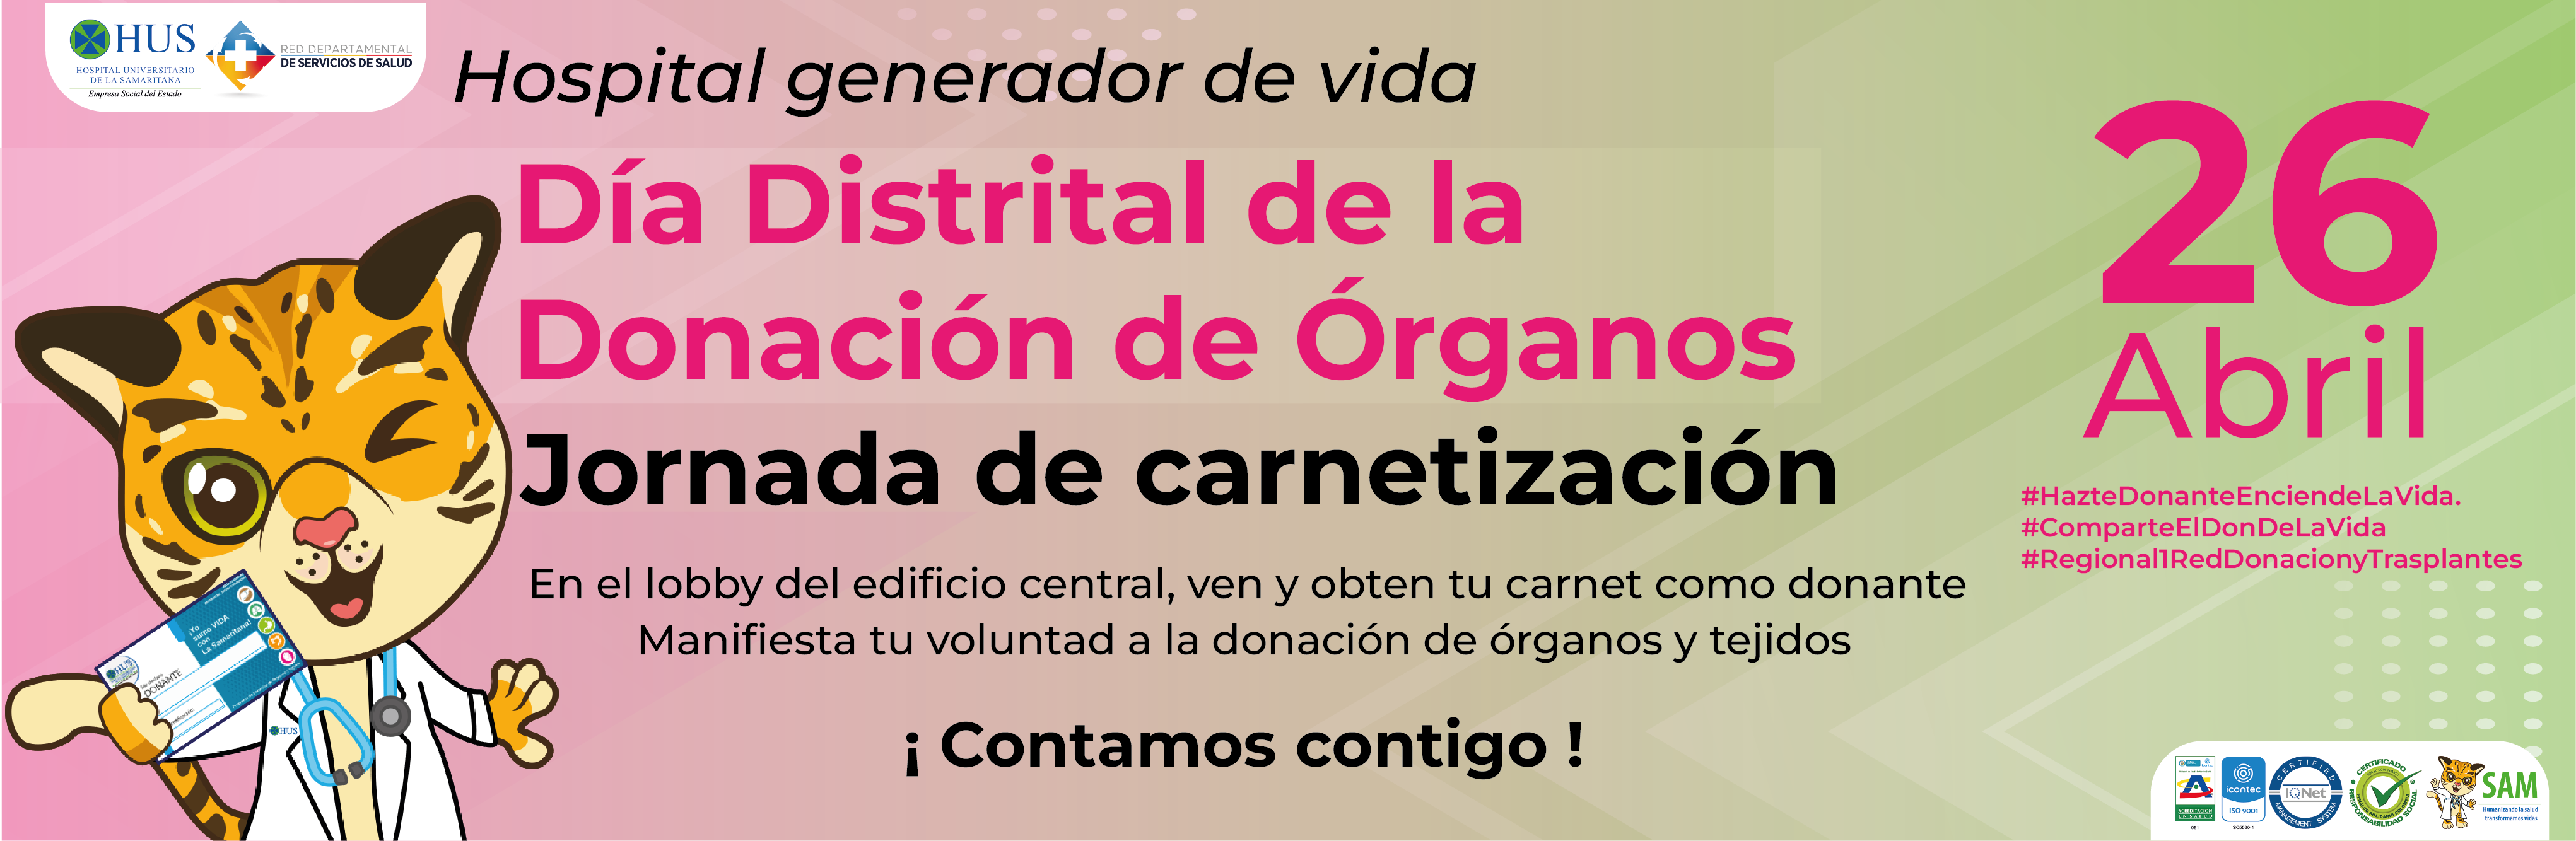 Jornada de carnetizacion donacion de organos